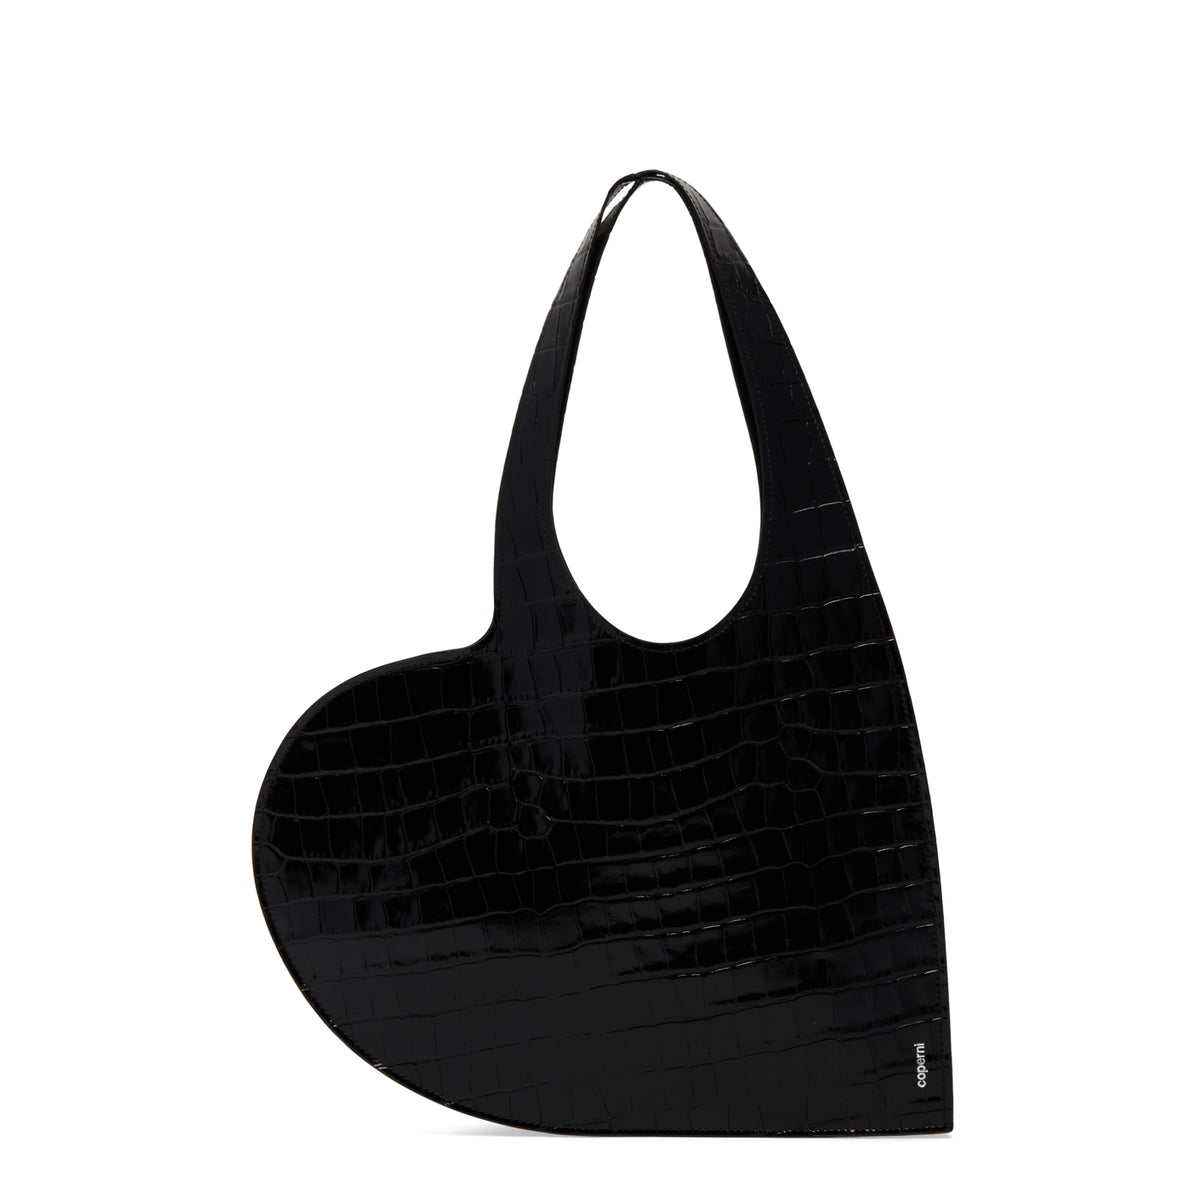 Heart Mini leather tote bag in black - Coperni